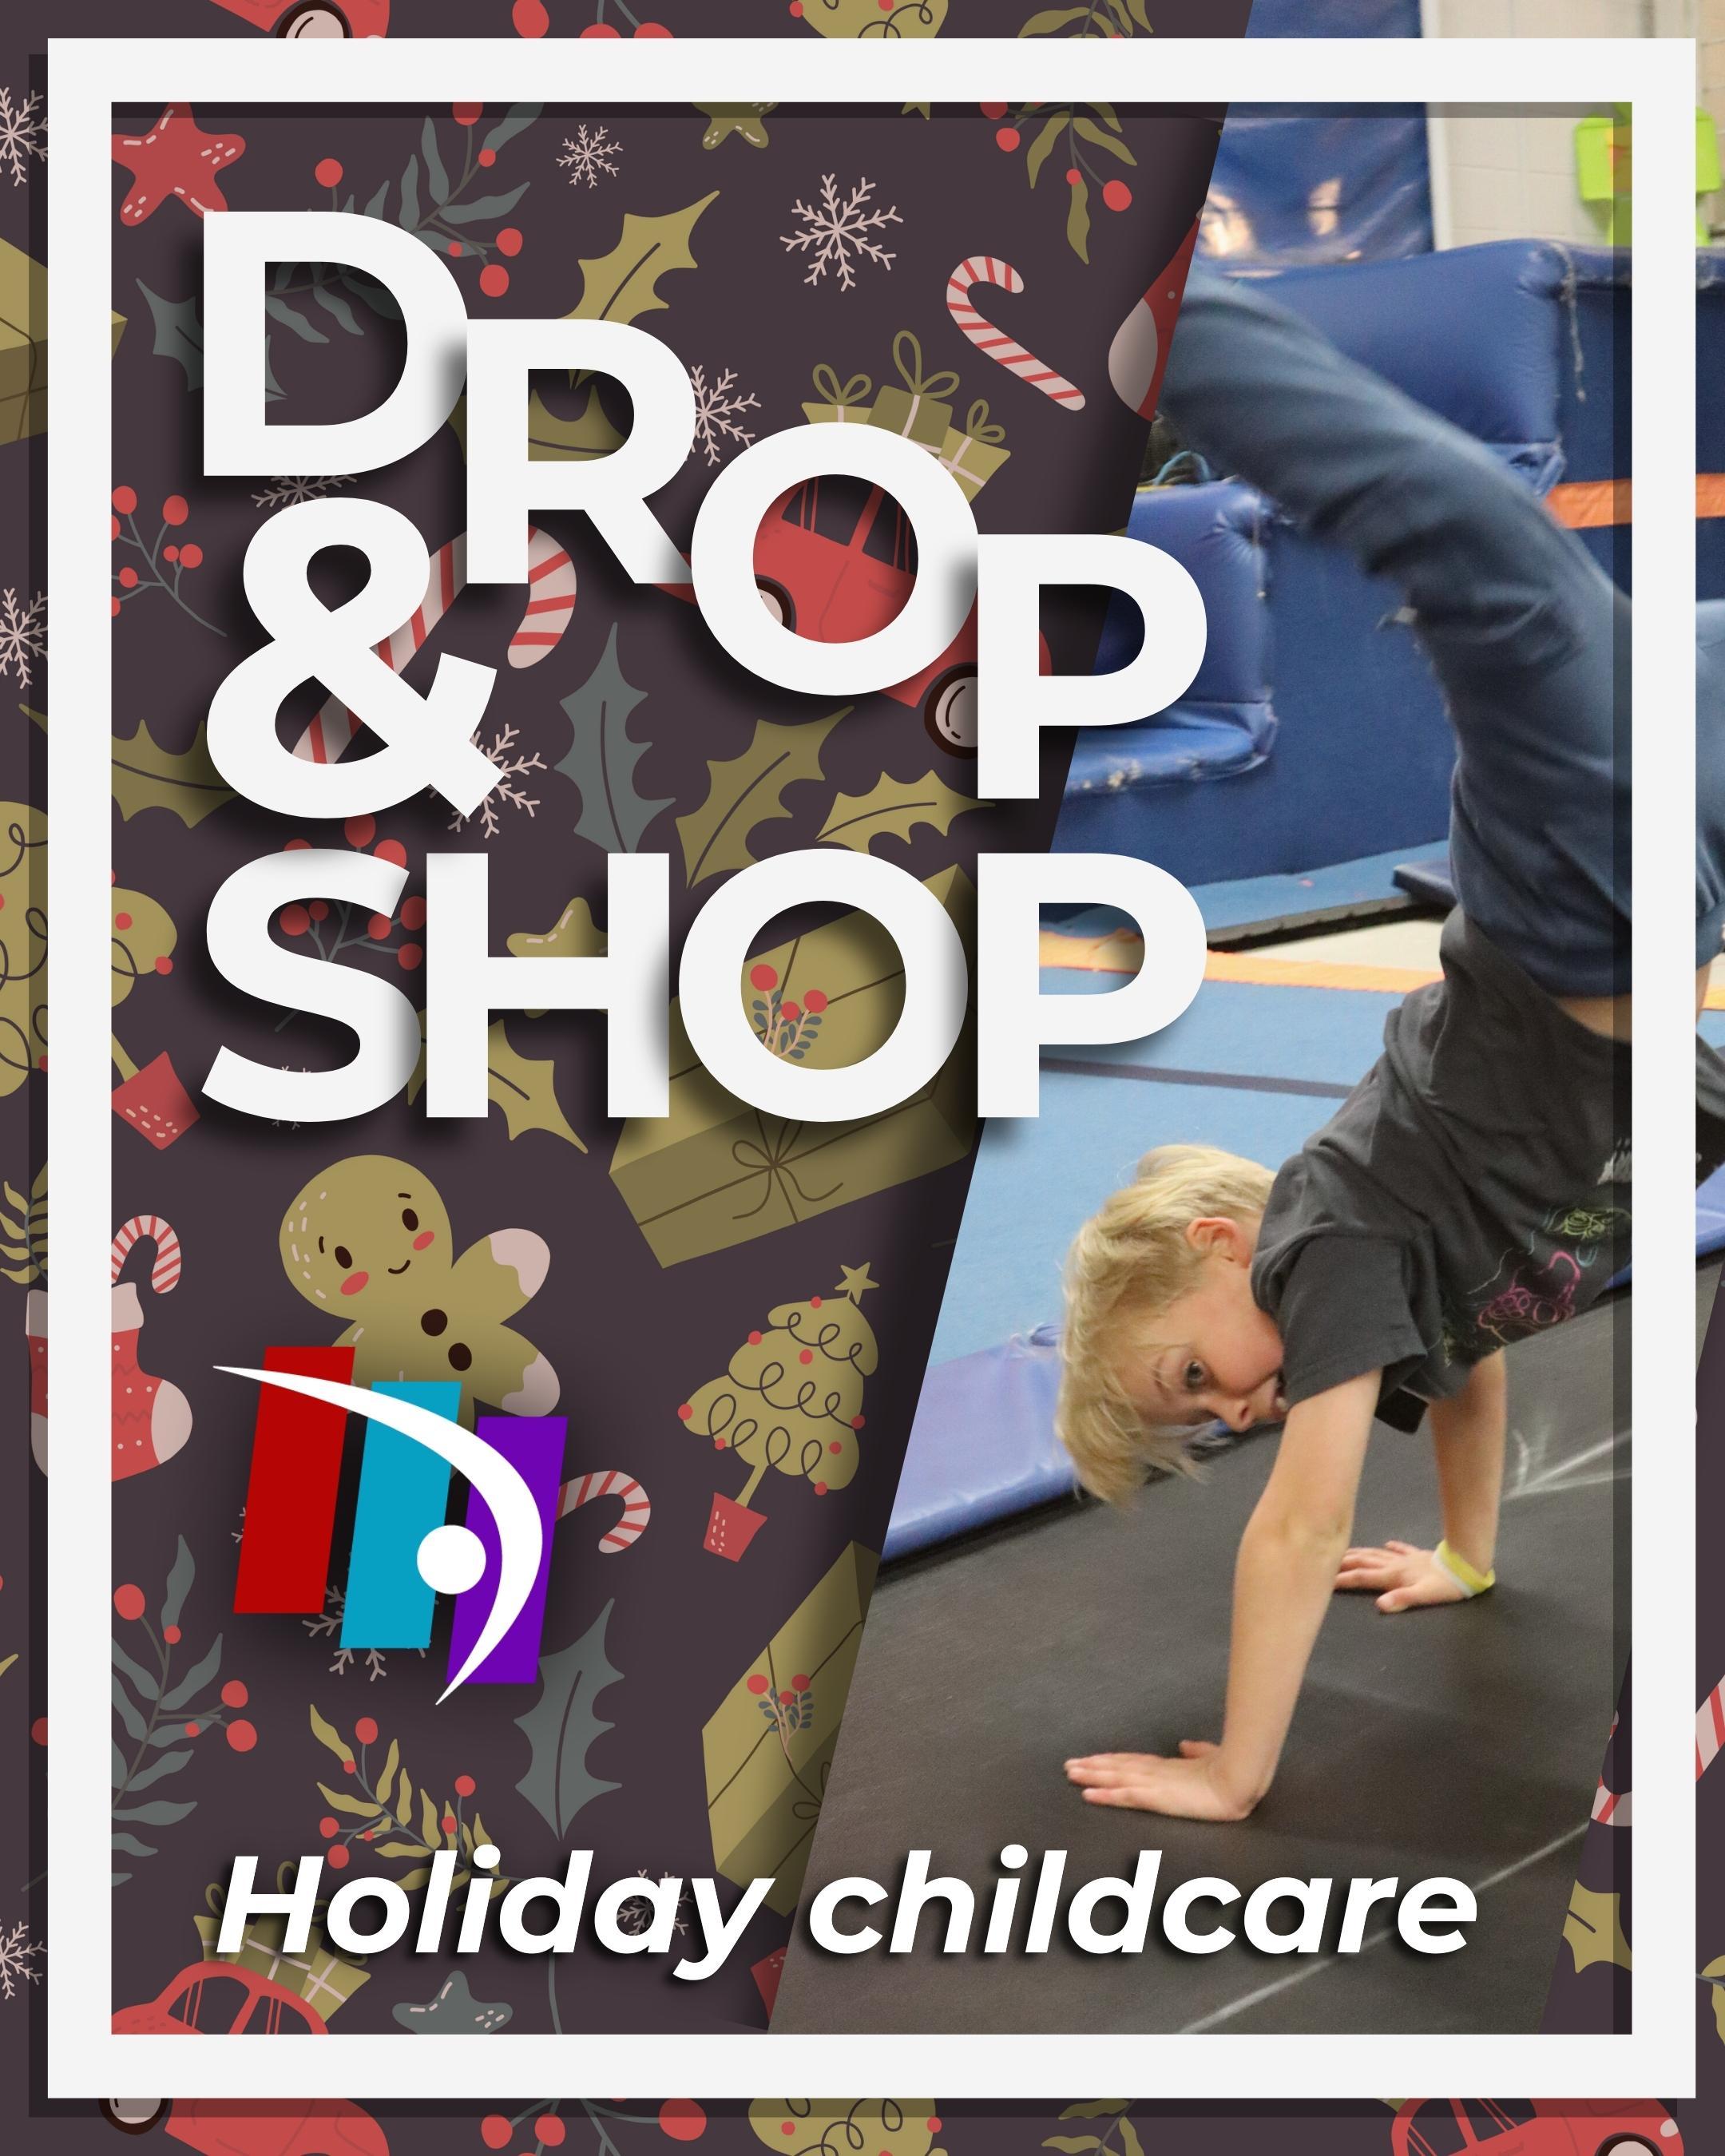 Image of holiday promo with child doing cartwheel